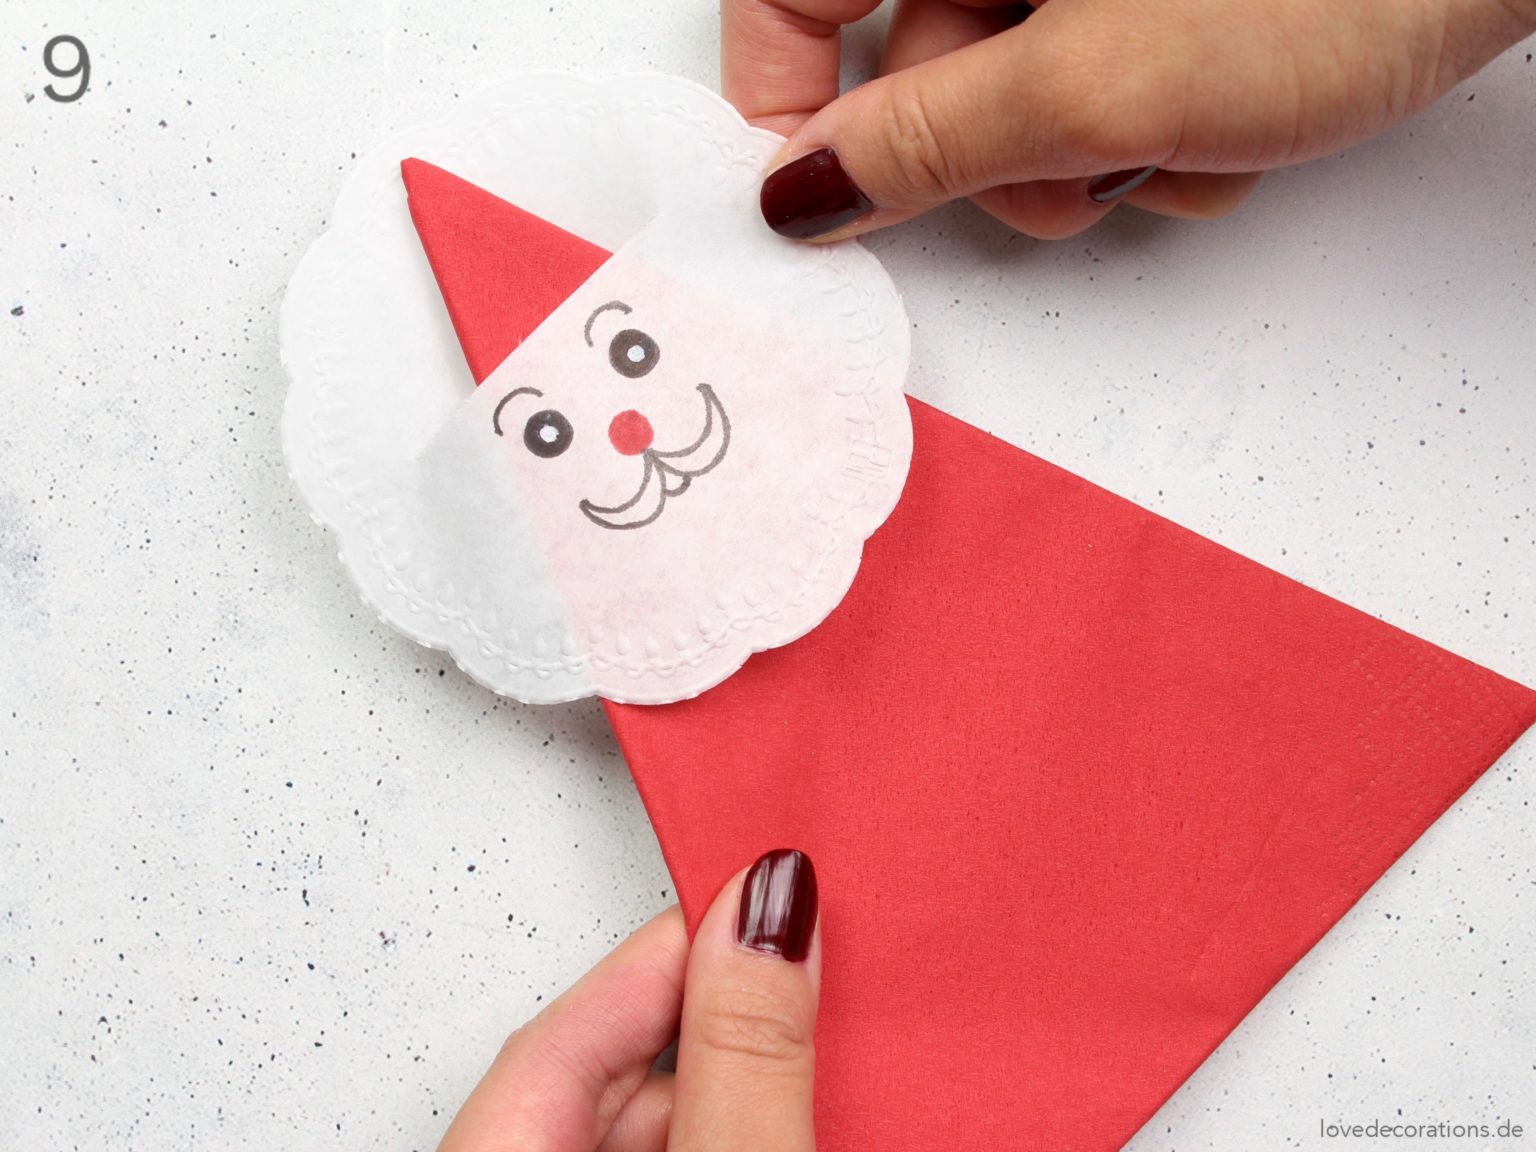 DIY Weihnachtsmann Servietten | Create yourself a merry little